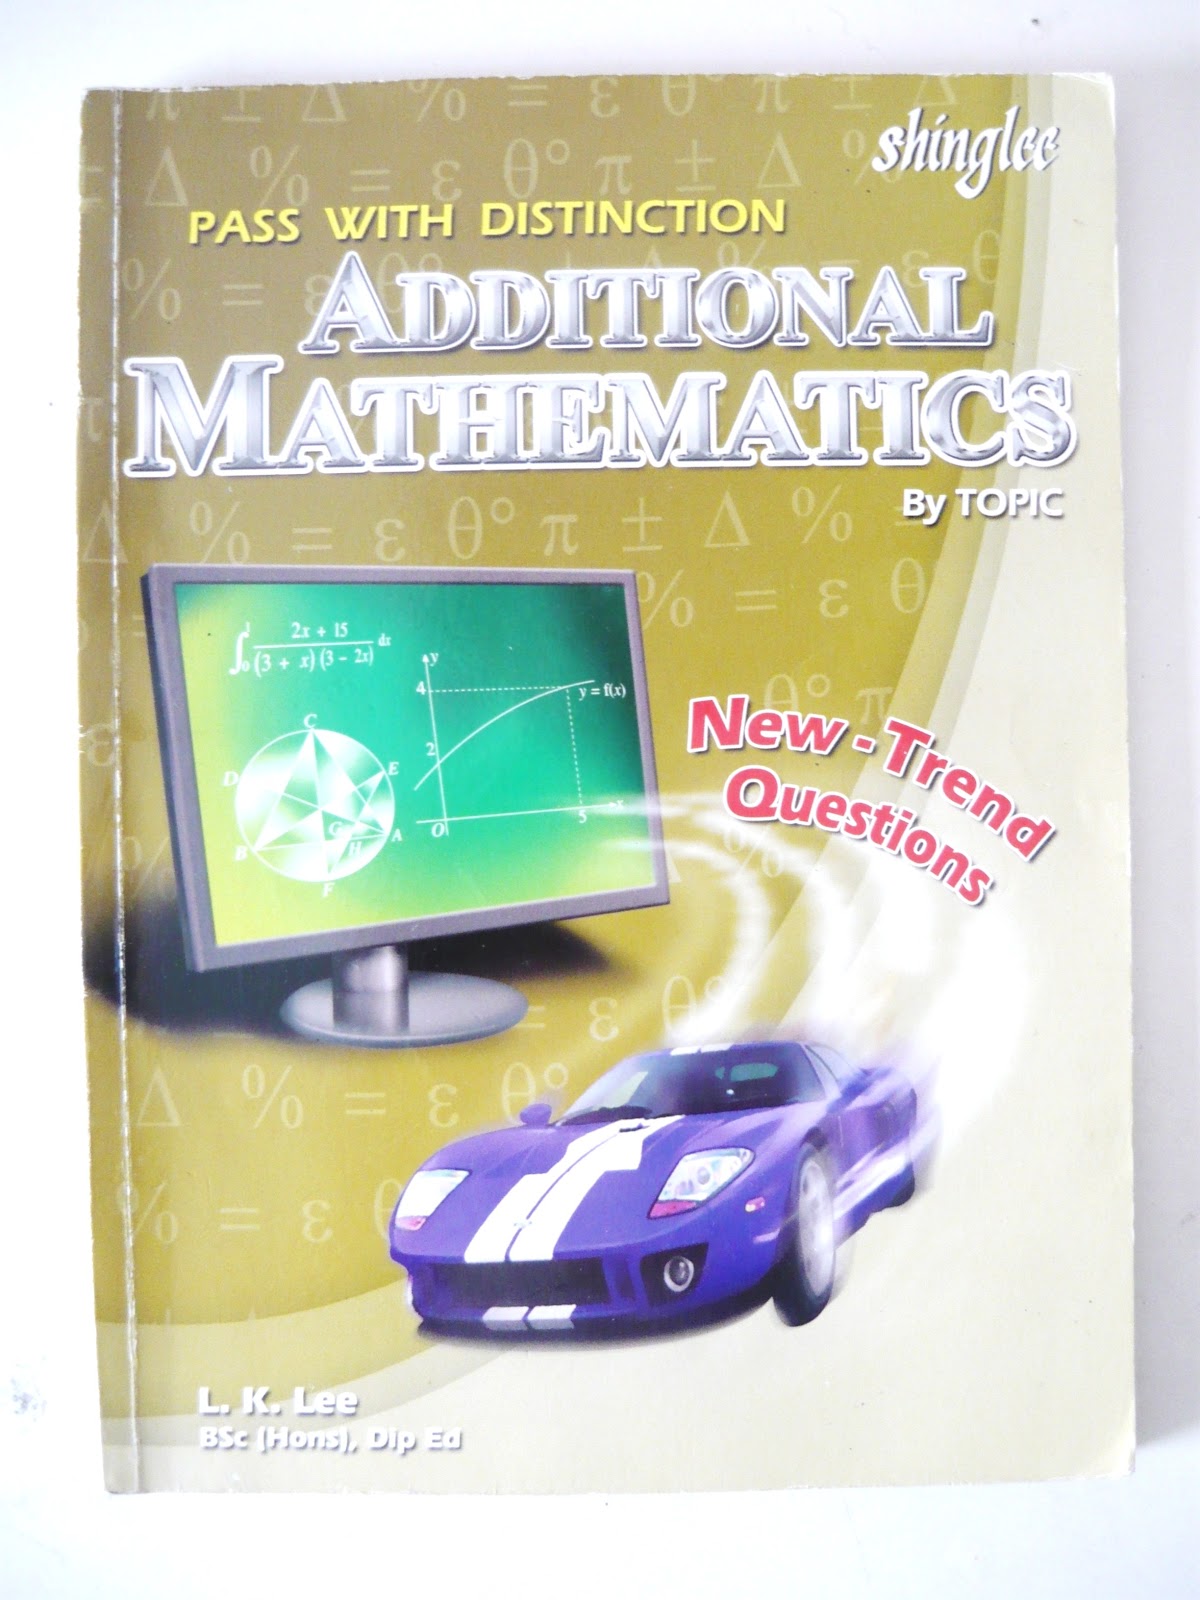 shinglee-additional-mathematics-workbook